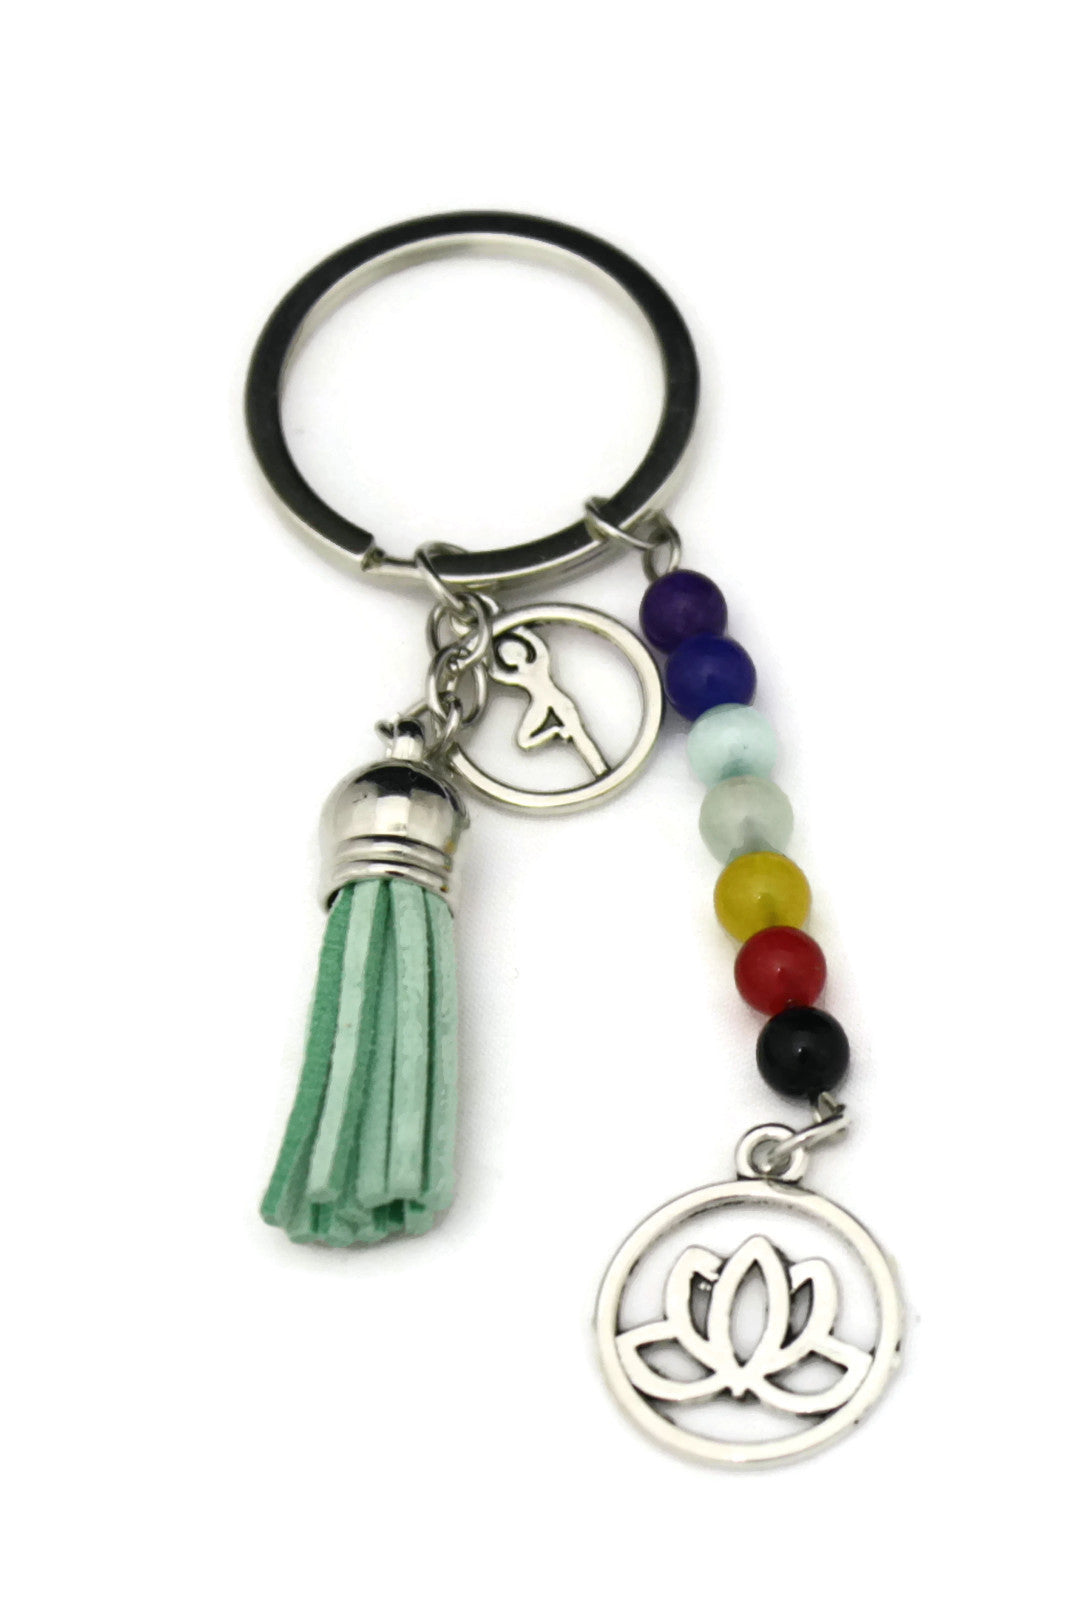 Yoga Essential Oil Diffuser Tassel Keychain- Multi-colored-Diffuser Bracelet-Destination Oils